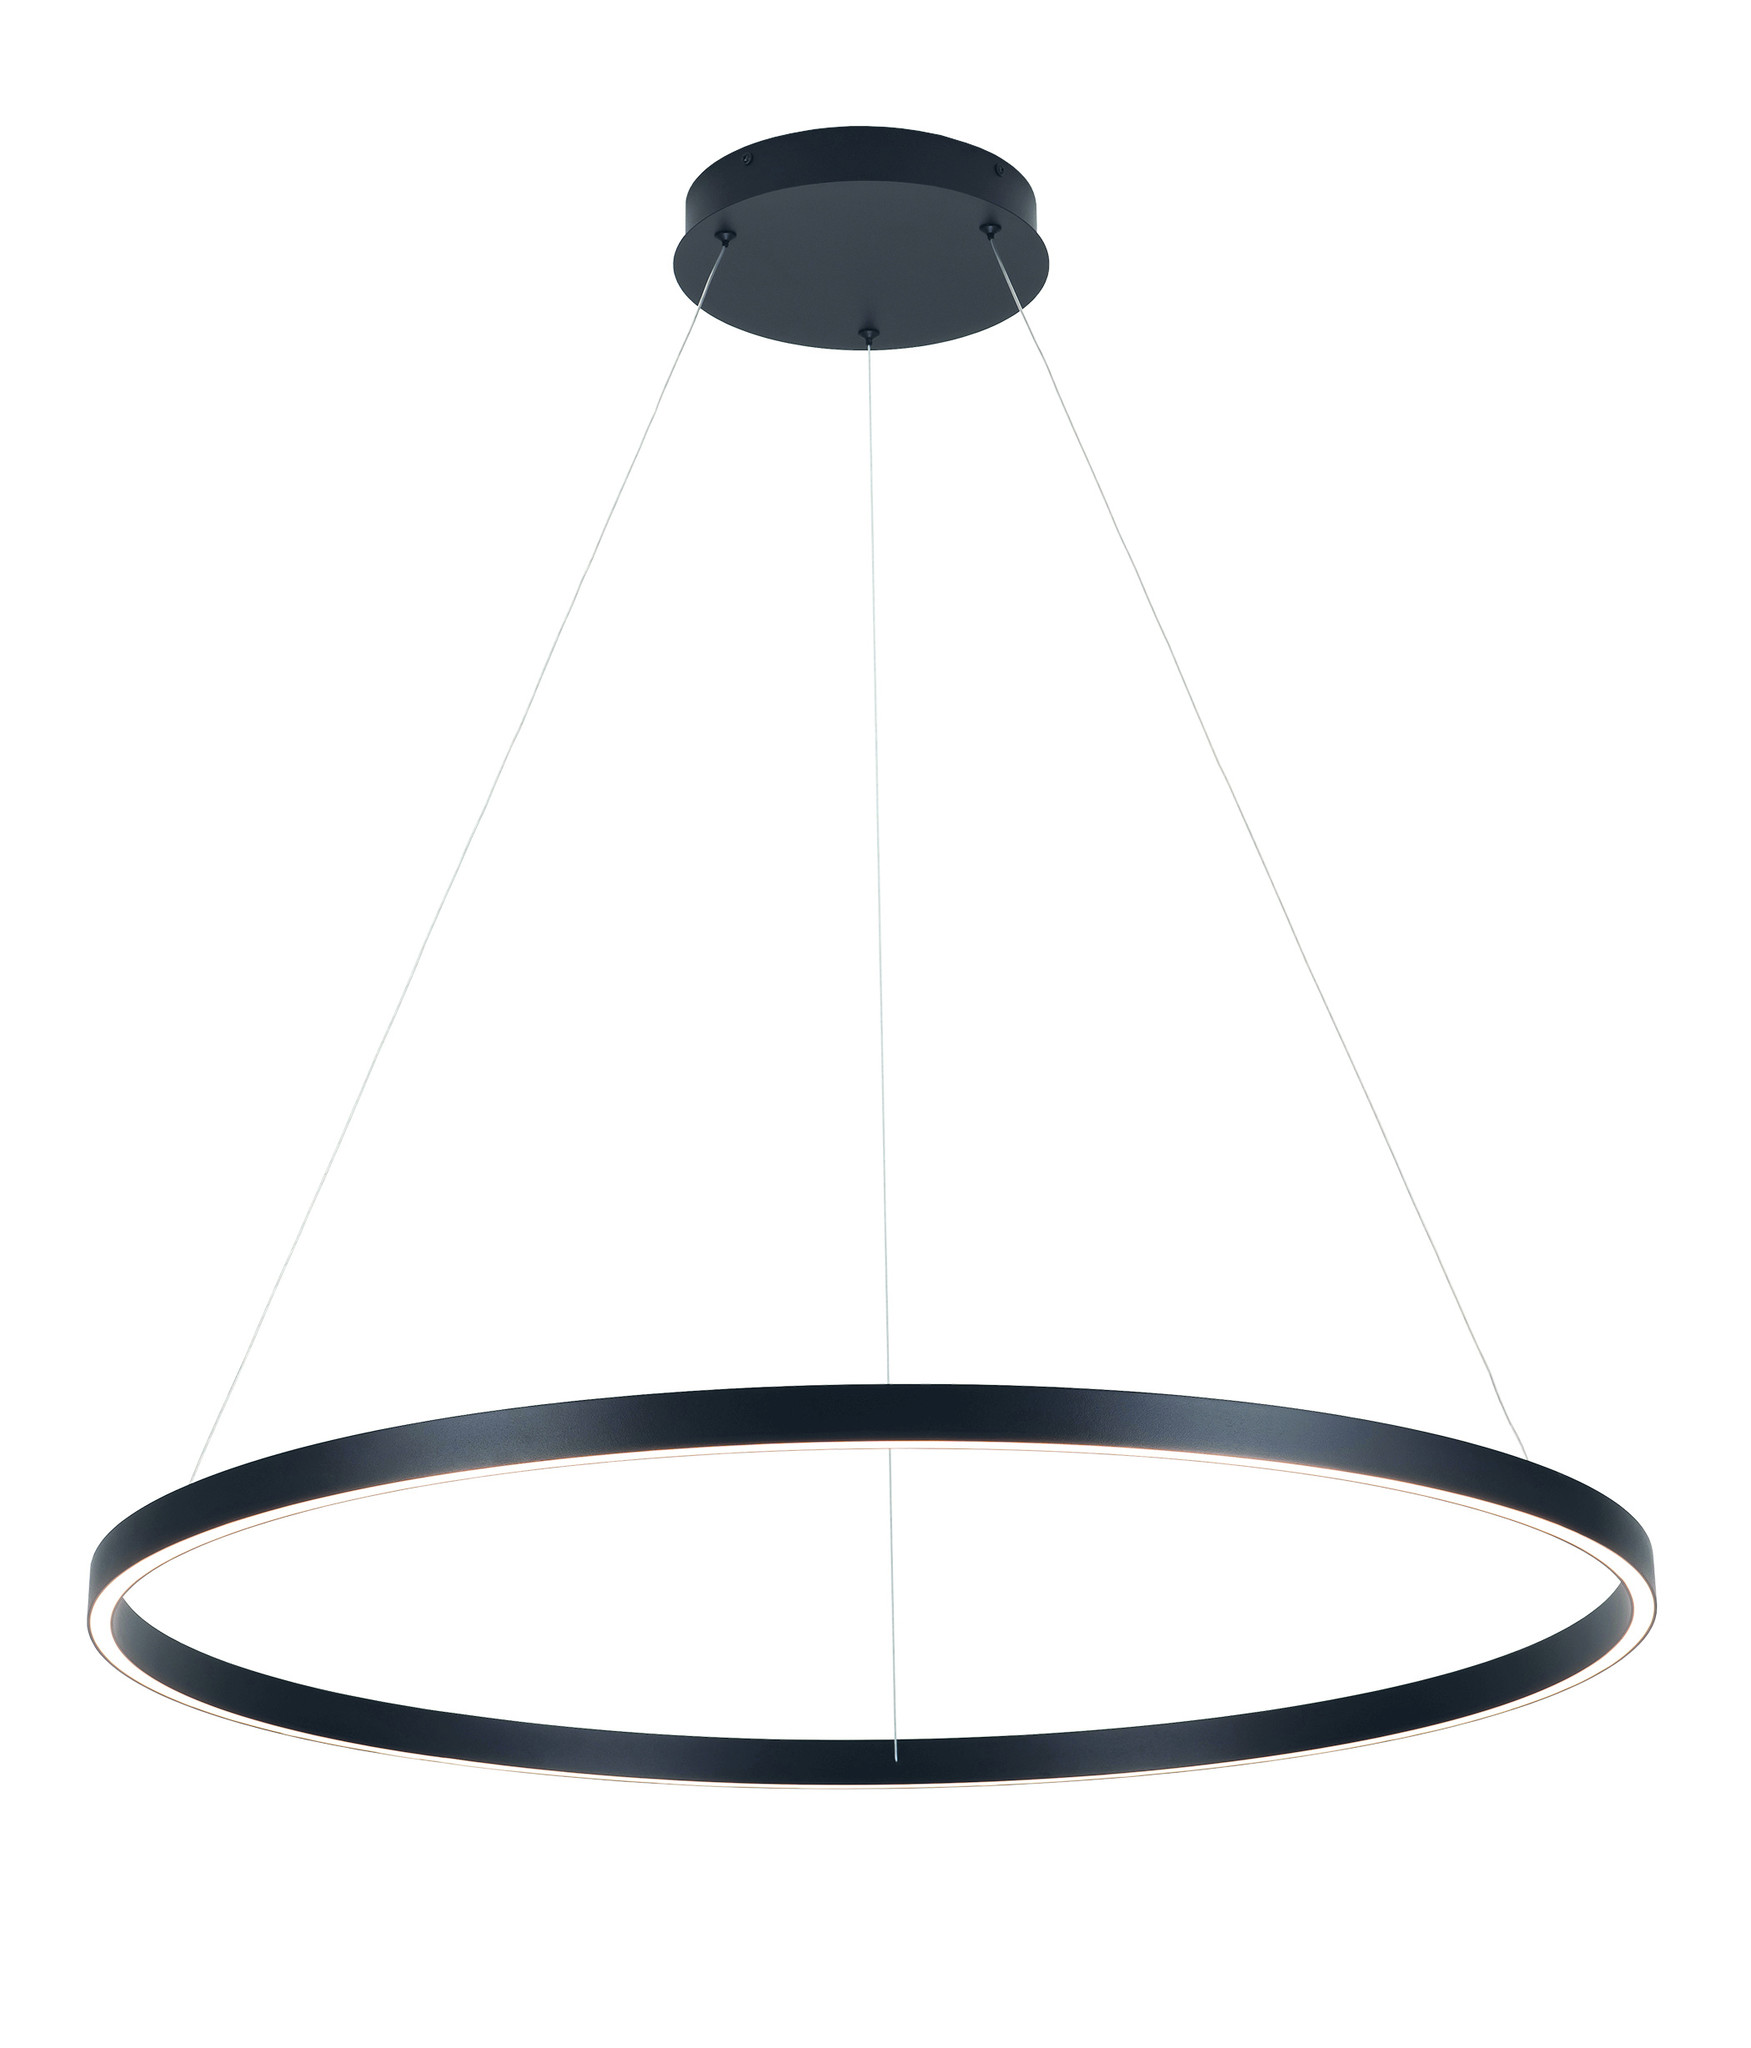 Hangen Ongemak zuiverheid Hanglamp design rond LED zwart of wit 76W 900mm Ø licht up en down | My  Planet LED